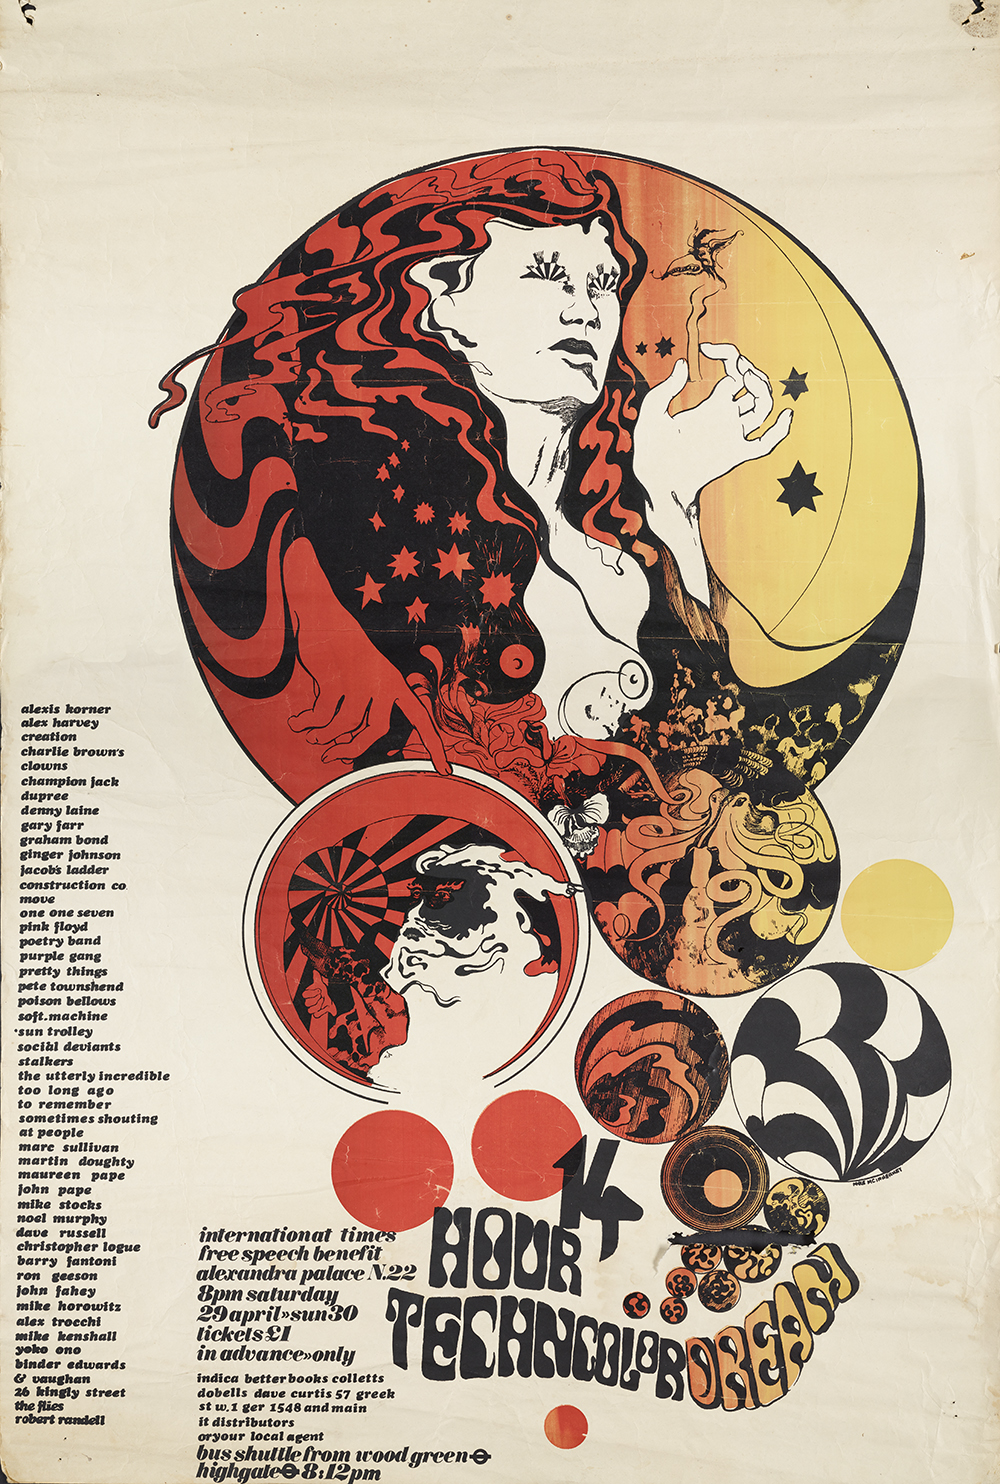 14 Hour Technicolor Dream Poster, 1967 (c) Mike McInnerney